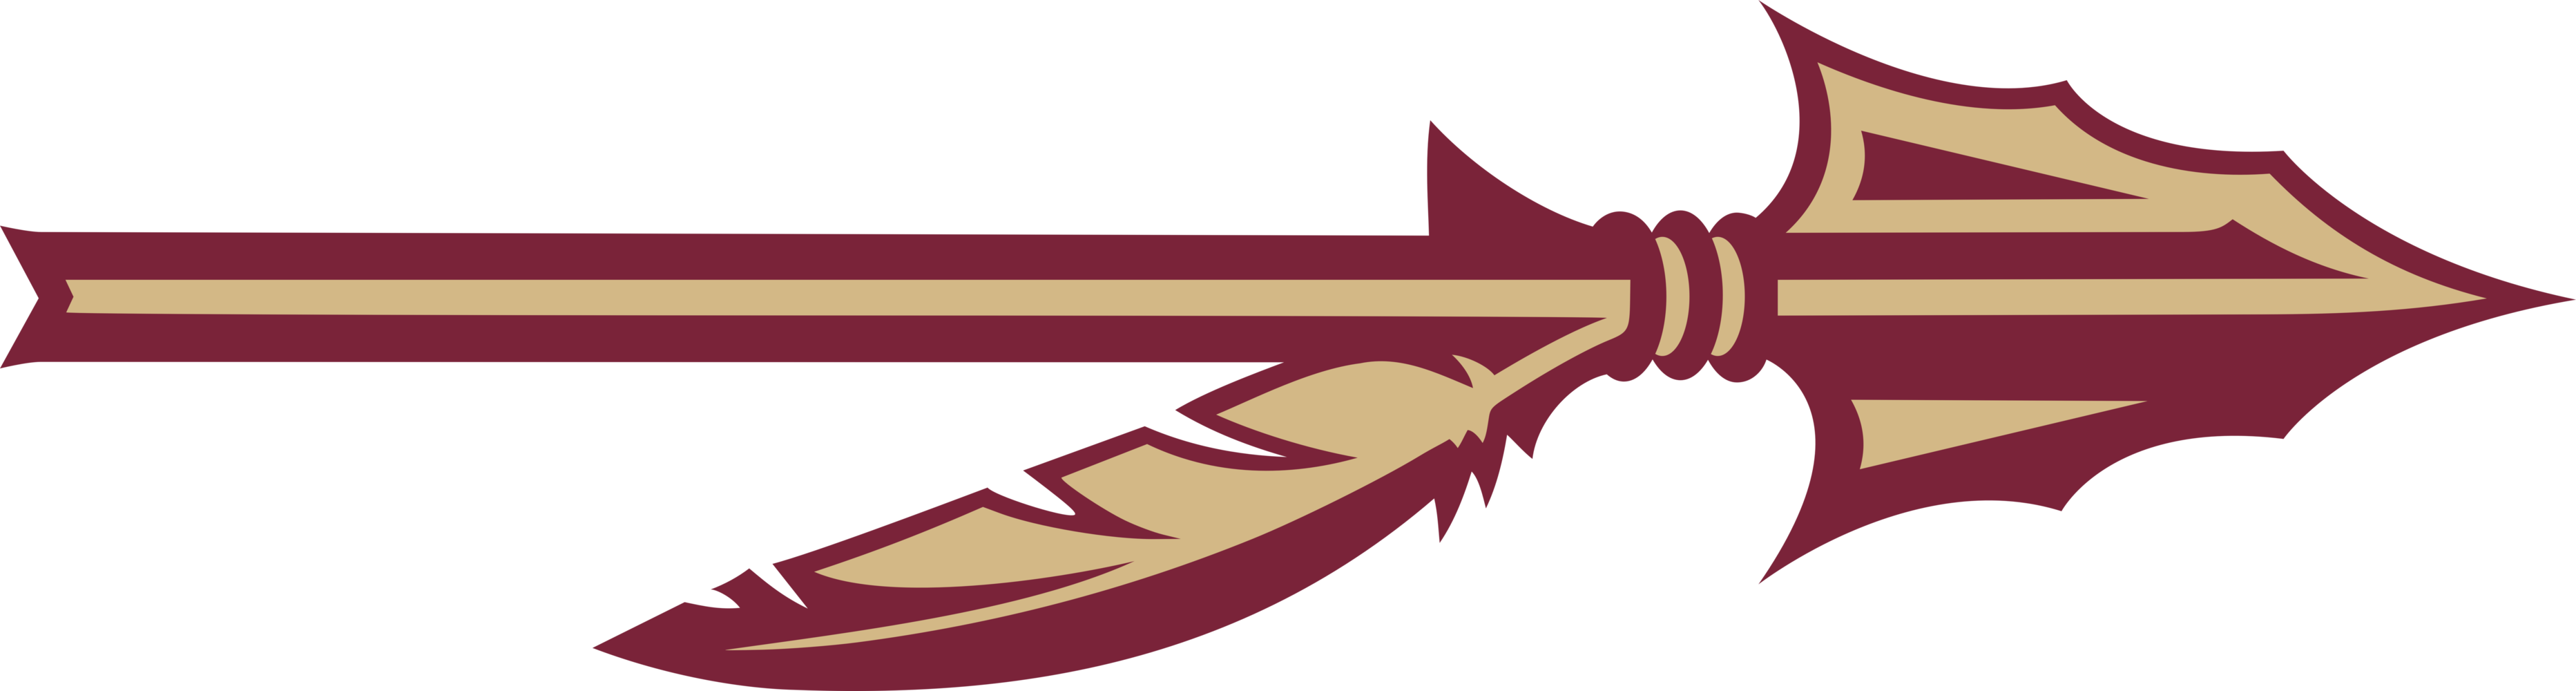 Florida State Seminoles Spear Logo Clipart - Florida State Seminoles Spear (3730x1000)